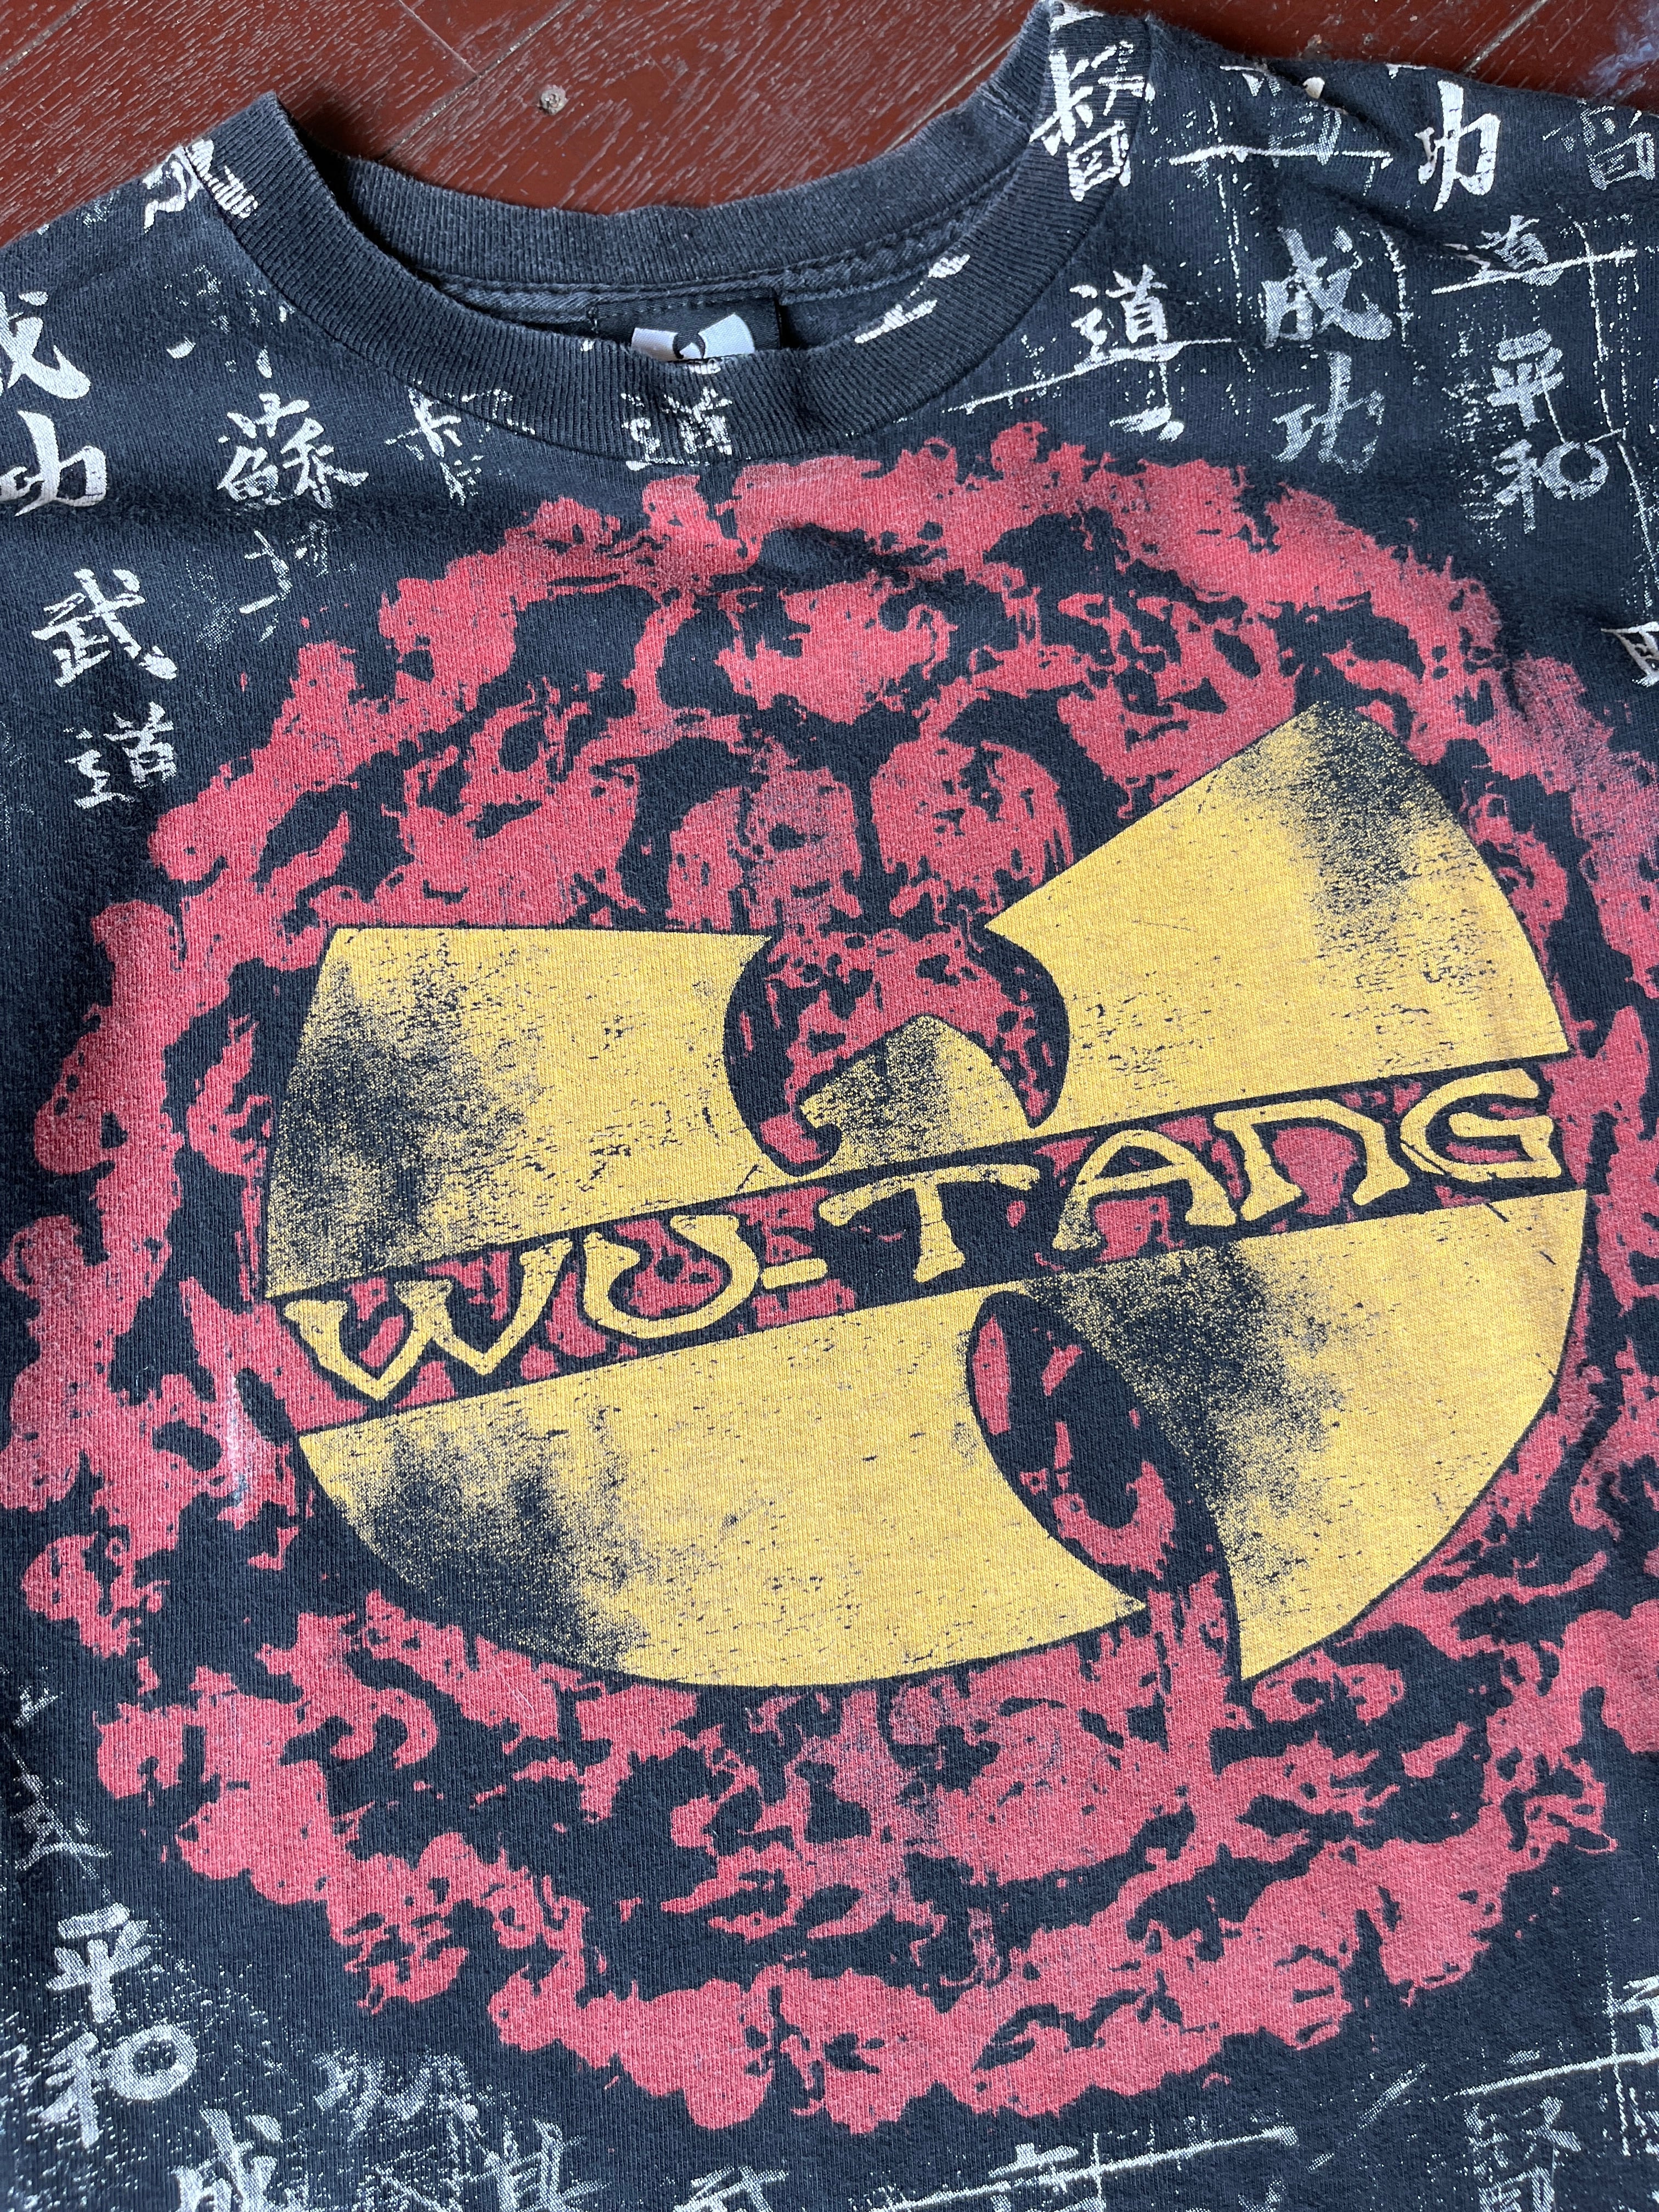 00's Wu-Tang Clan T-shirt 2007 ウータンクラン 漢字 ラップT rap